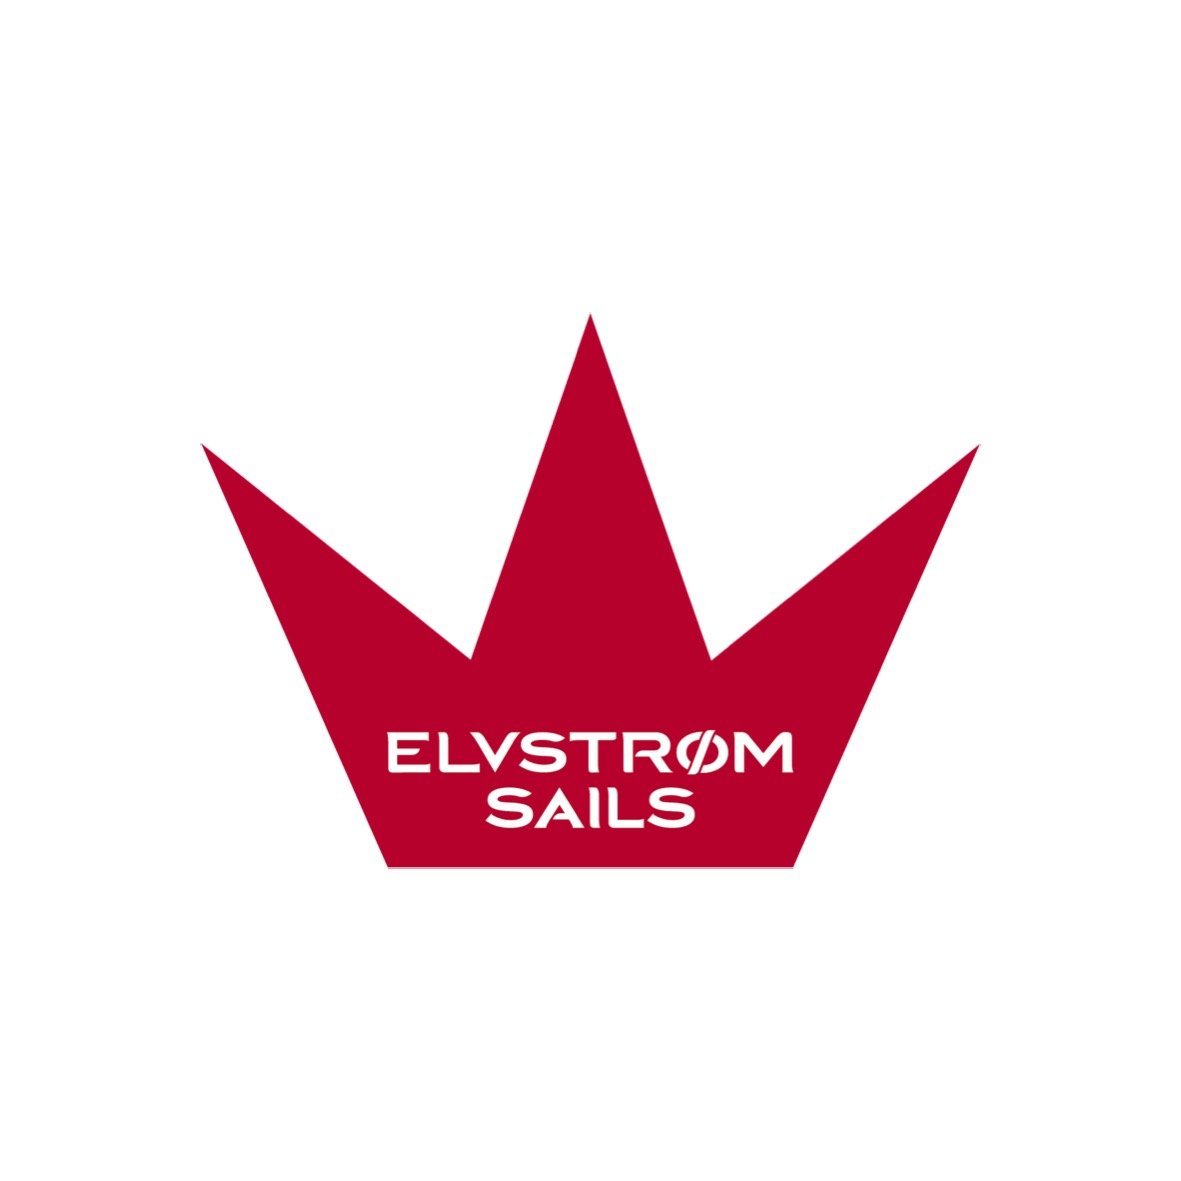 Elfström-logo.jpg